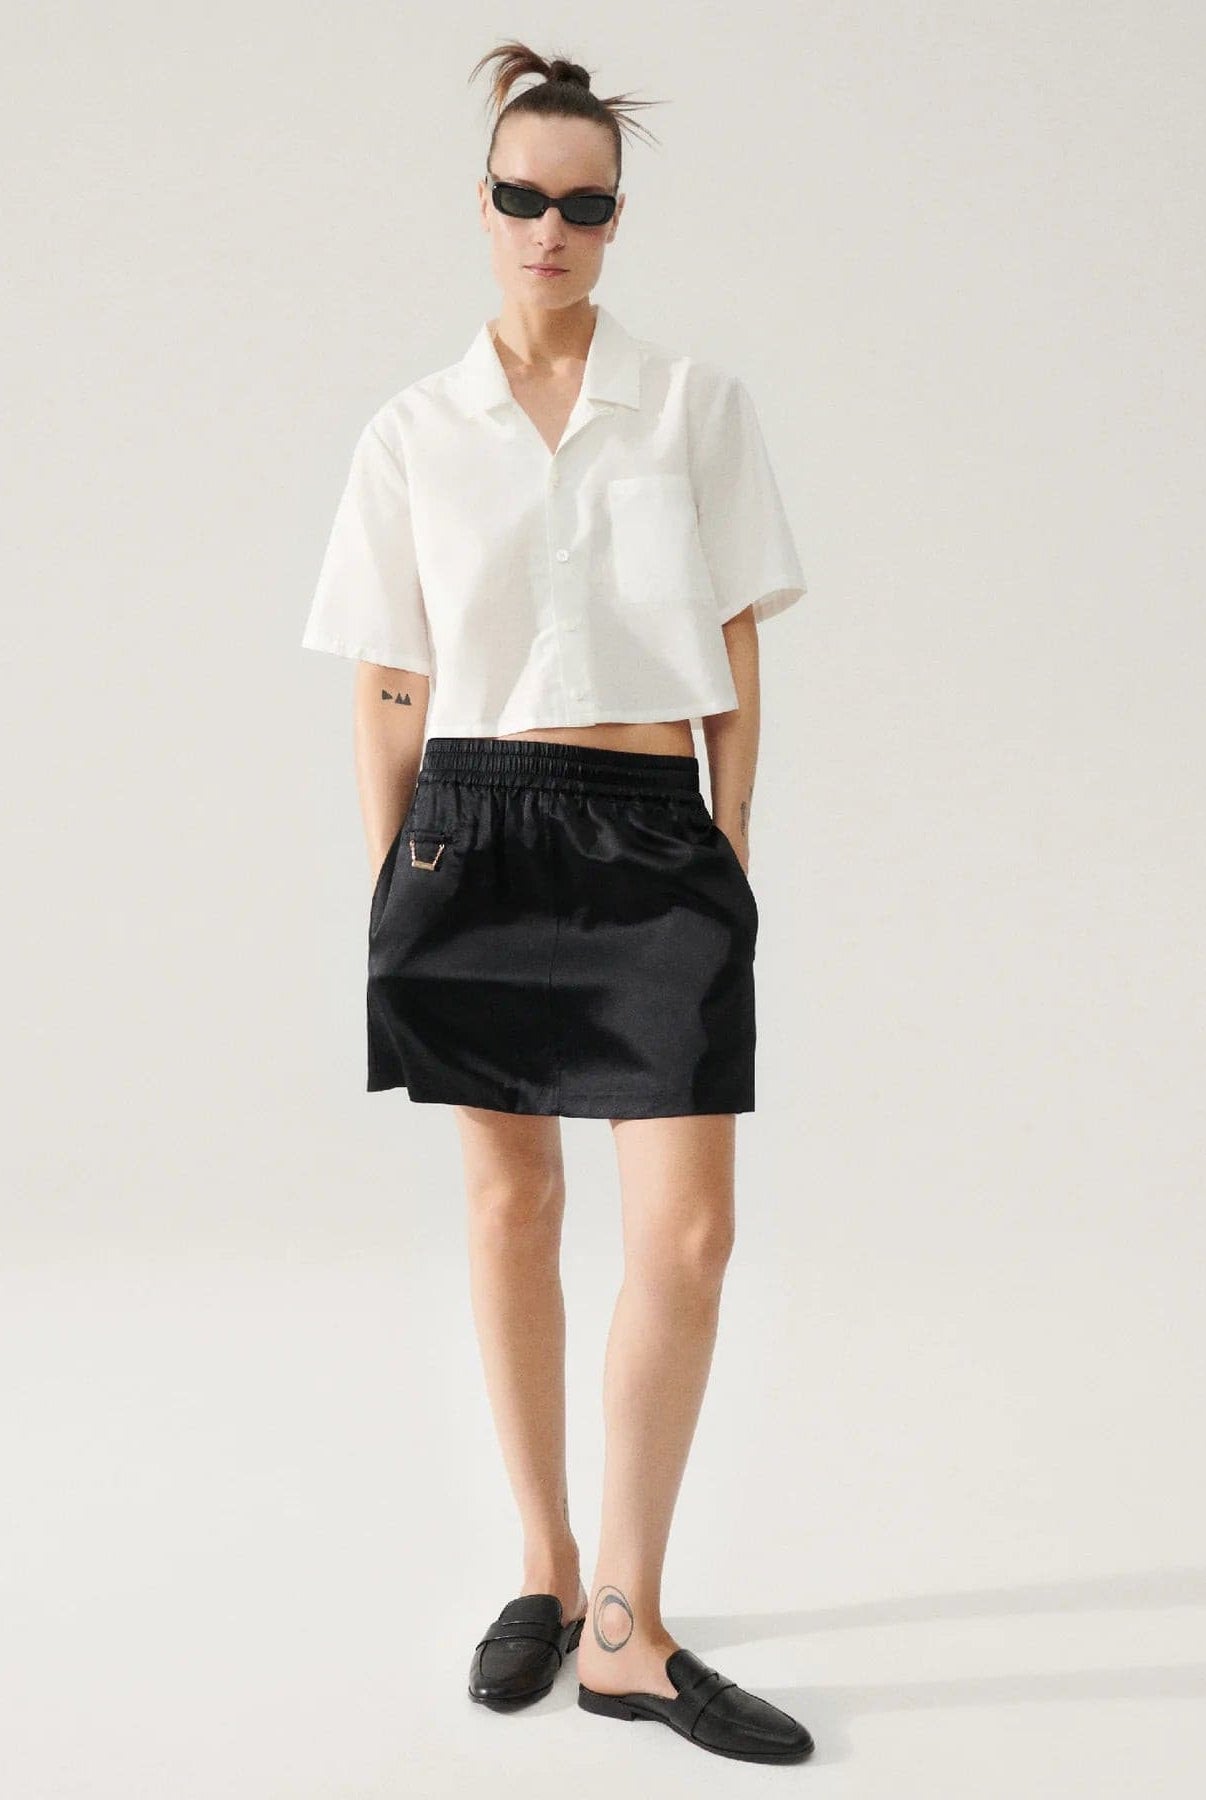 Billie Boutique Silk Laundry - Heavy A-Line Mini Skirt Black